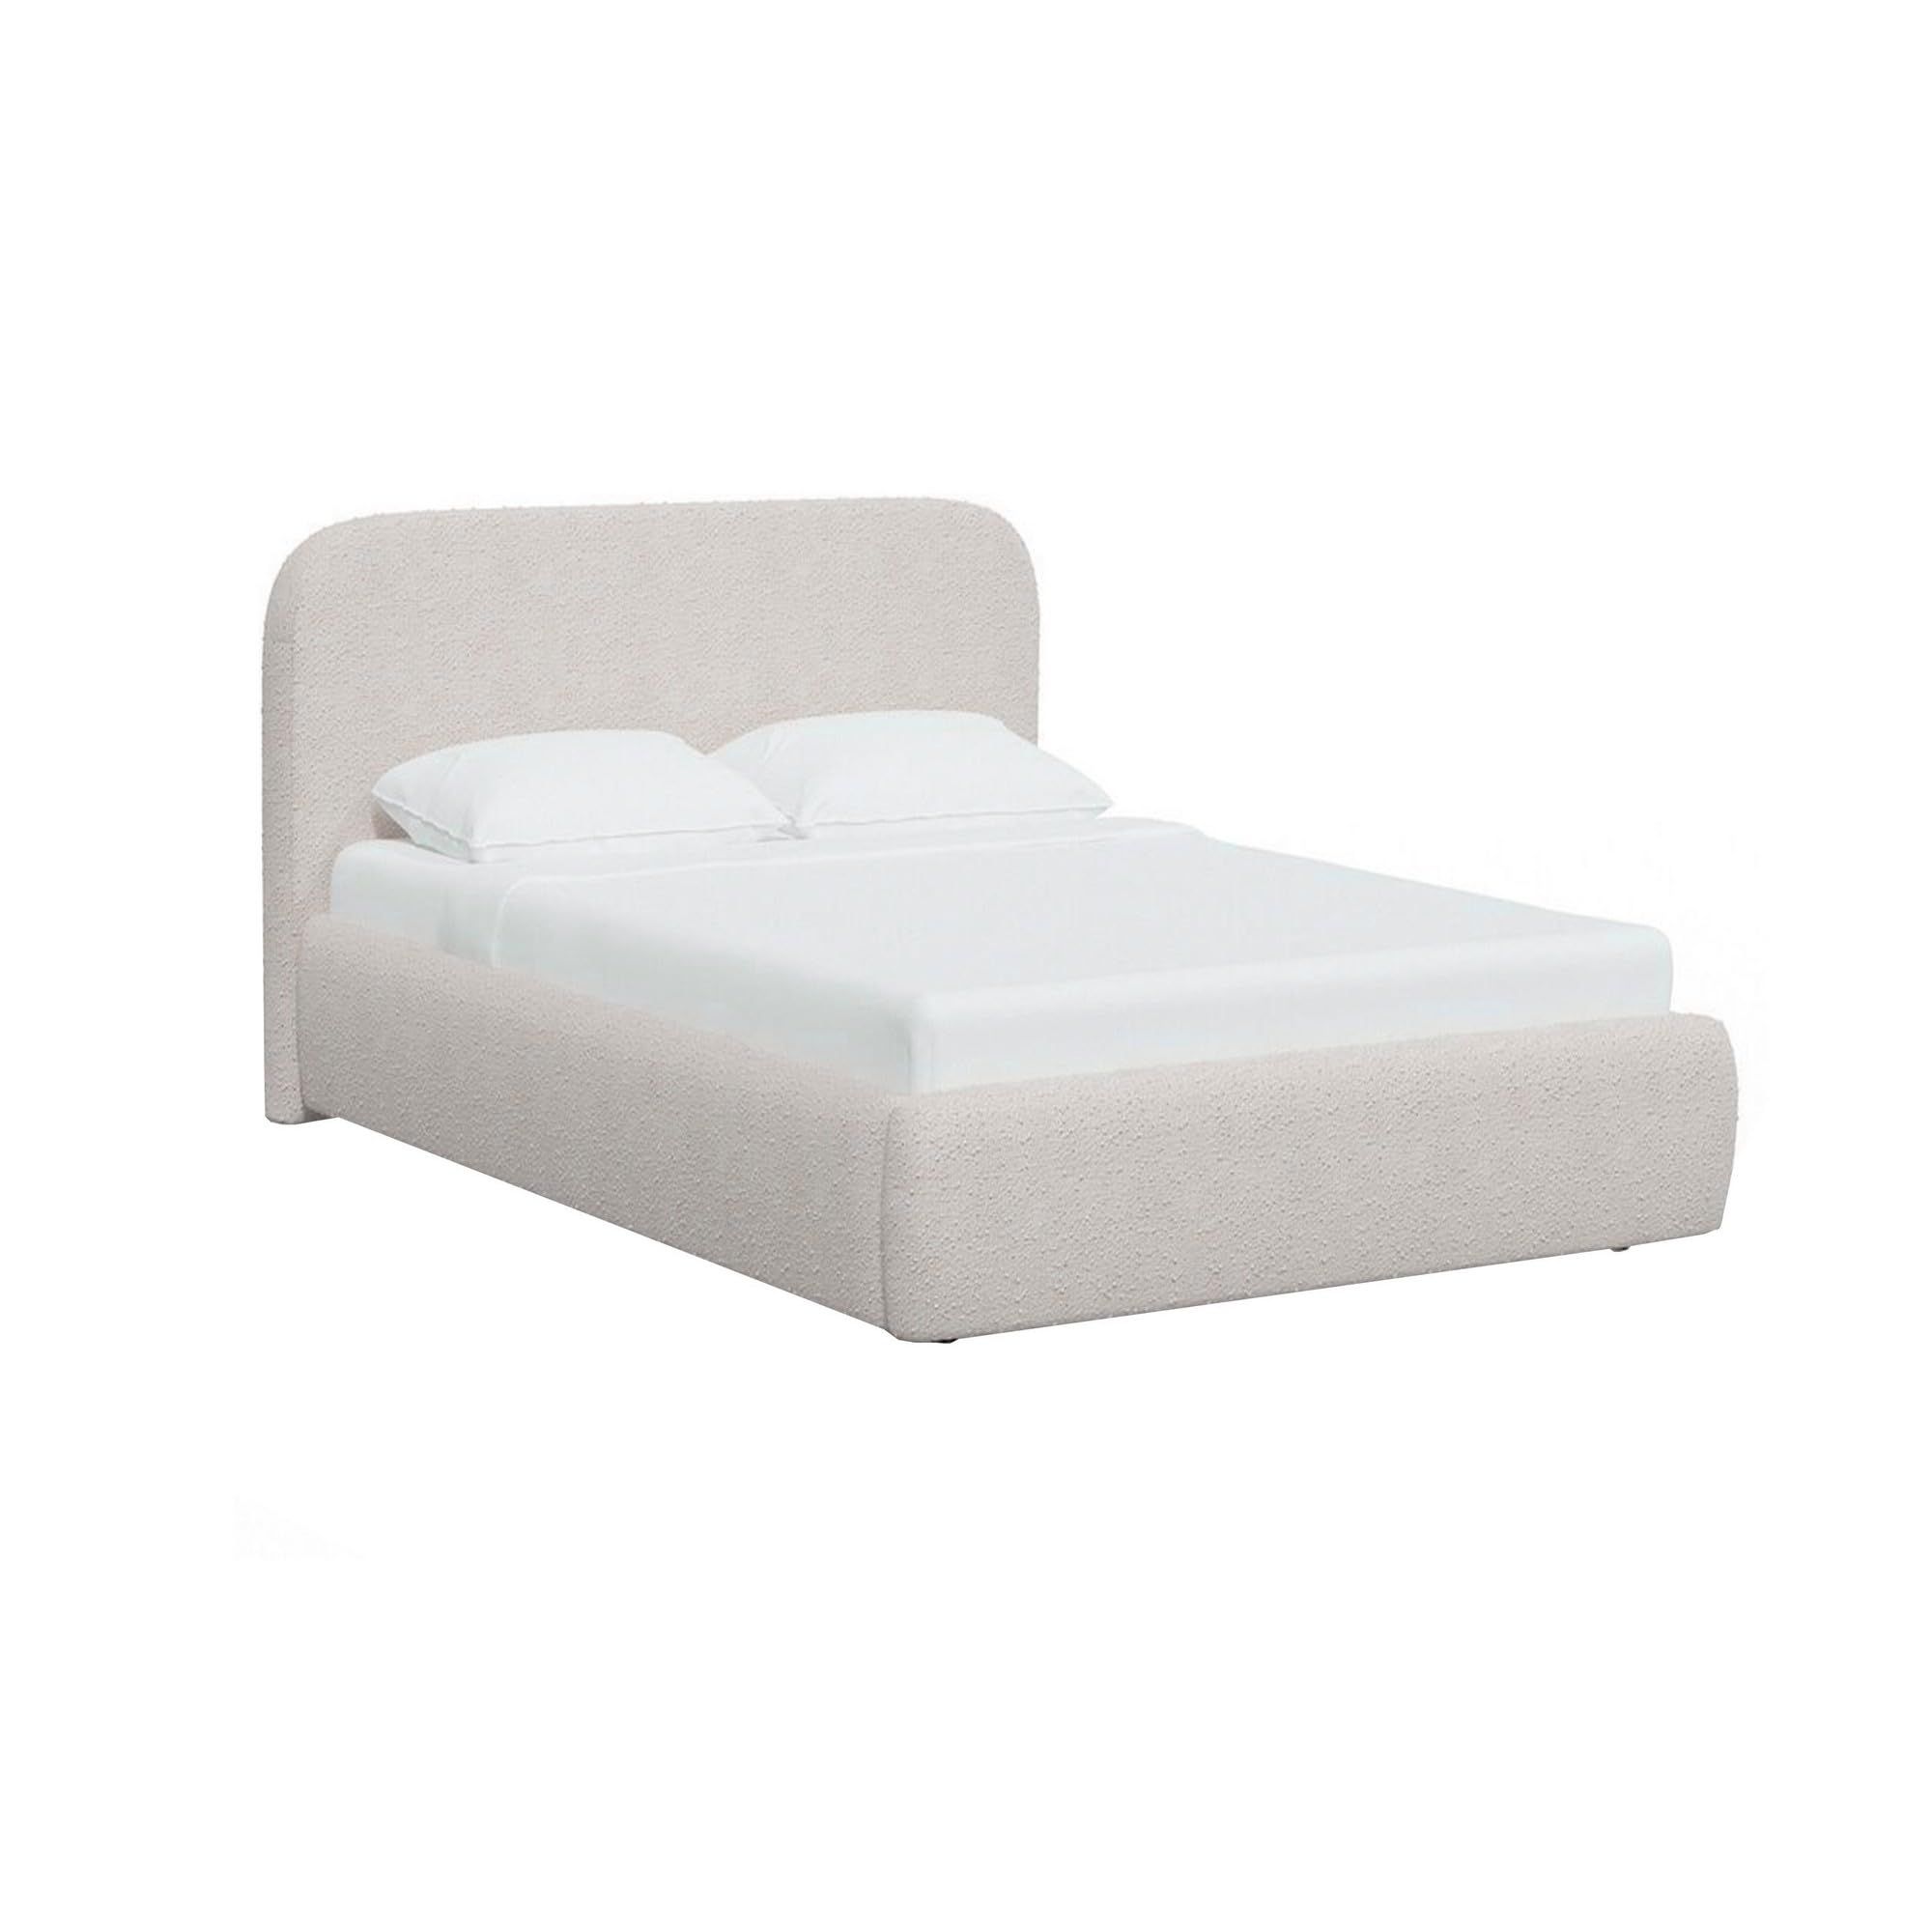 Benjara Ziya Queen Size Bed, Cream Boucle Fabric Upholstery, Curved Panel Headboard | Amazon (US)